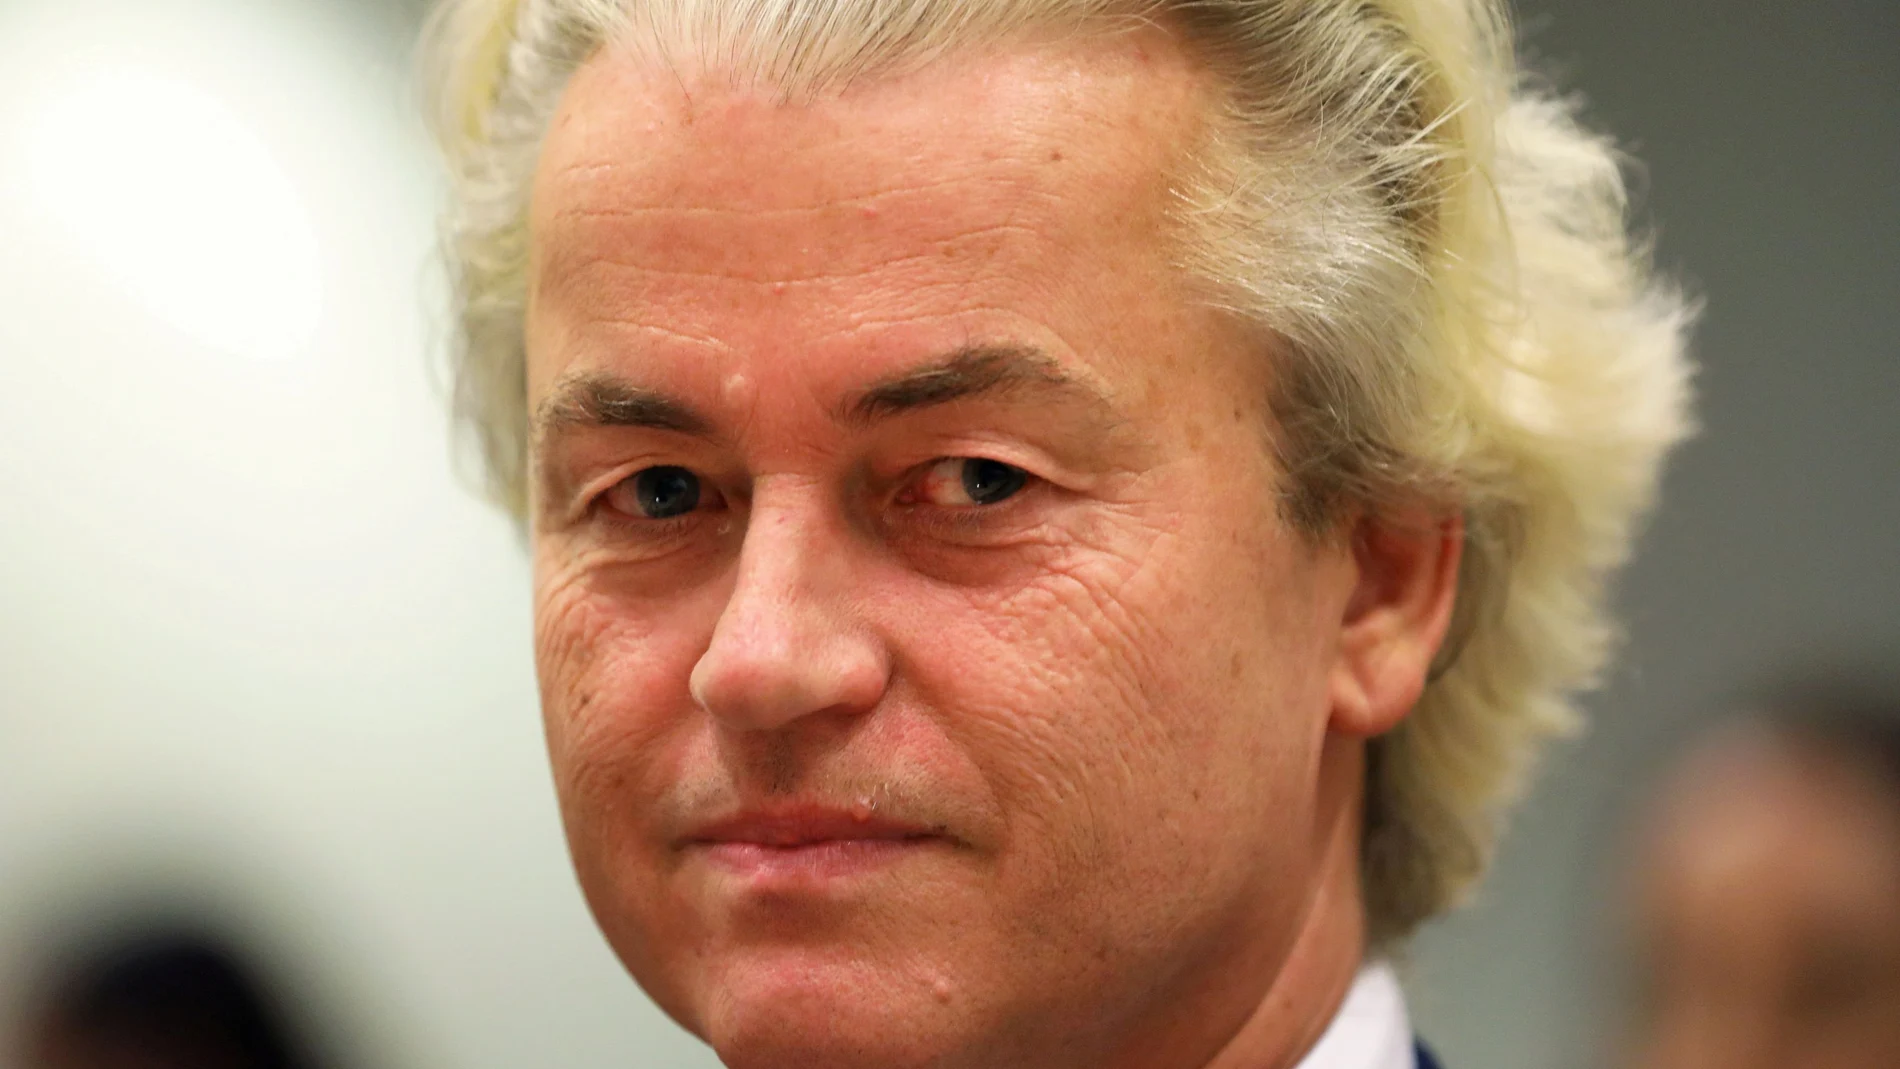 FILE PHOTO: Dutch anti-Islam politician Geert Wilders appears in court in Amsterdam